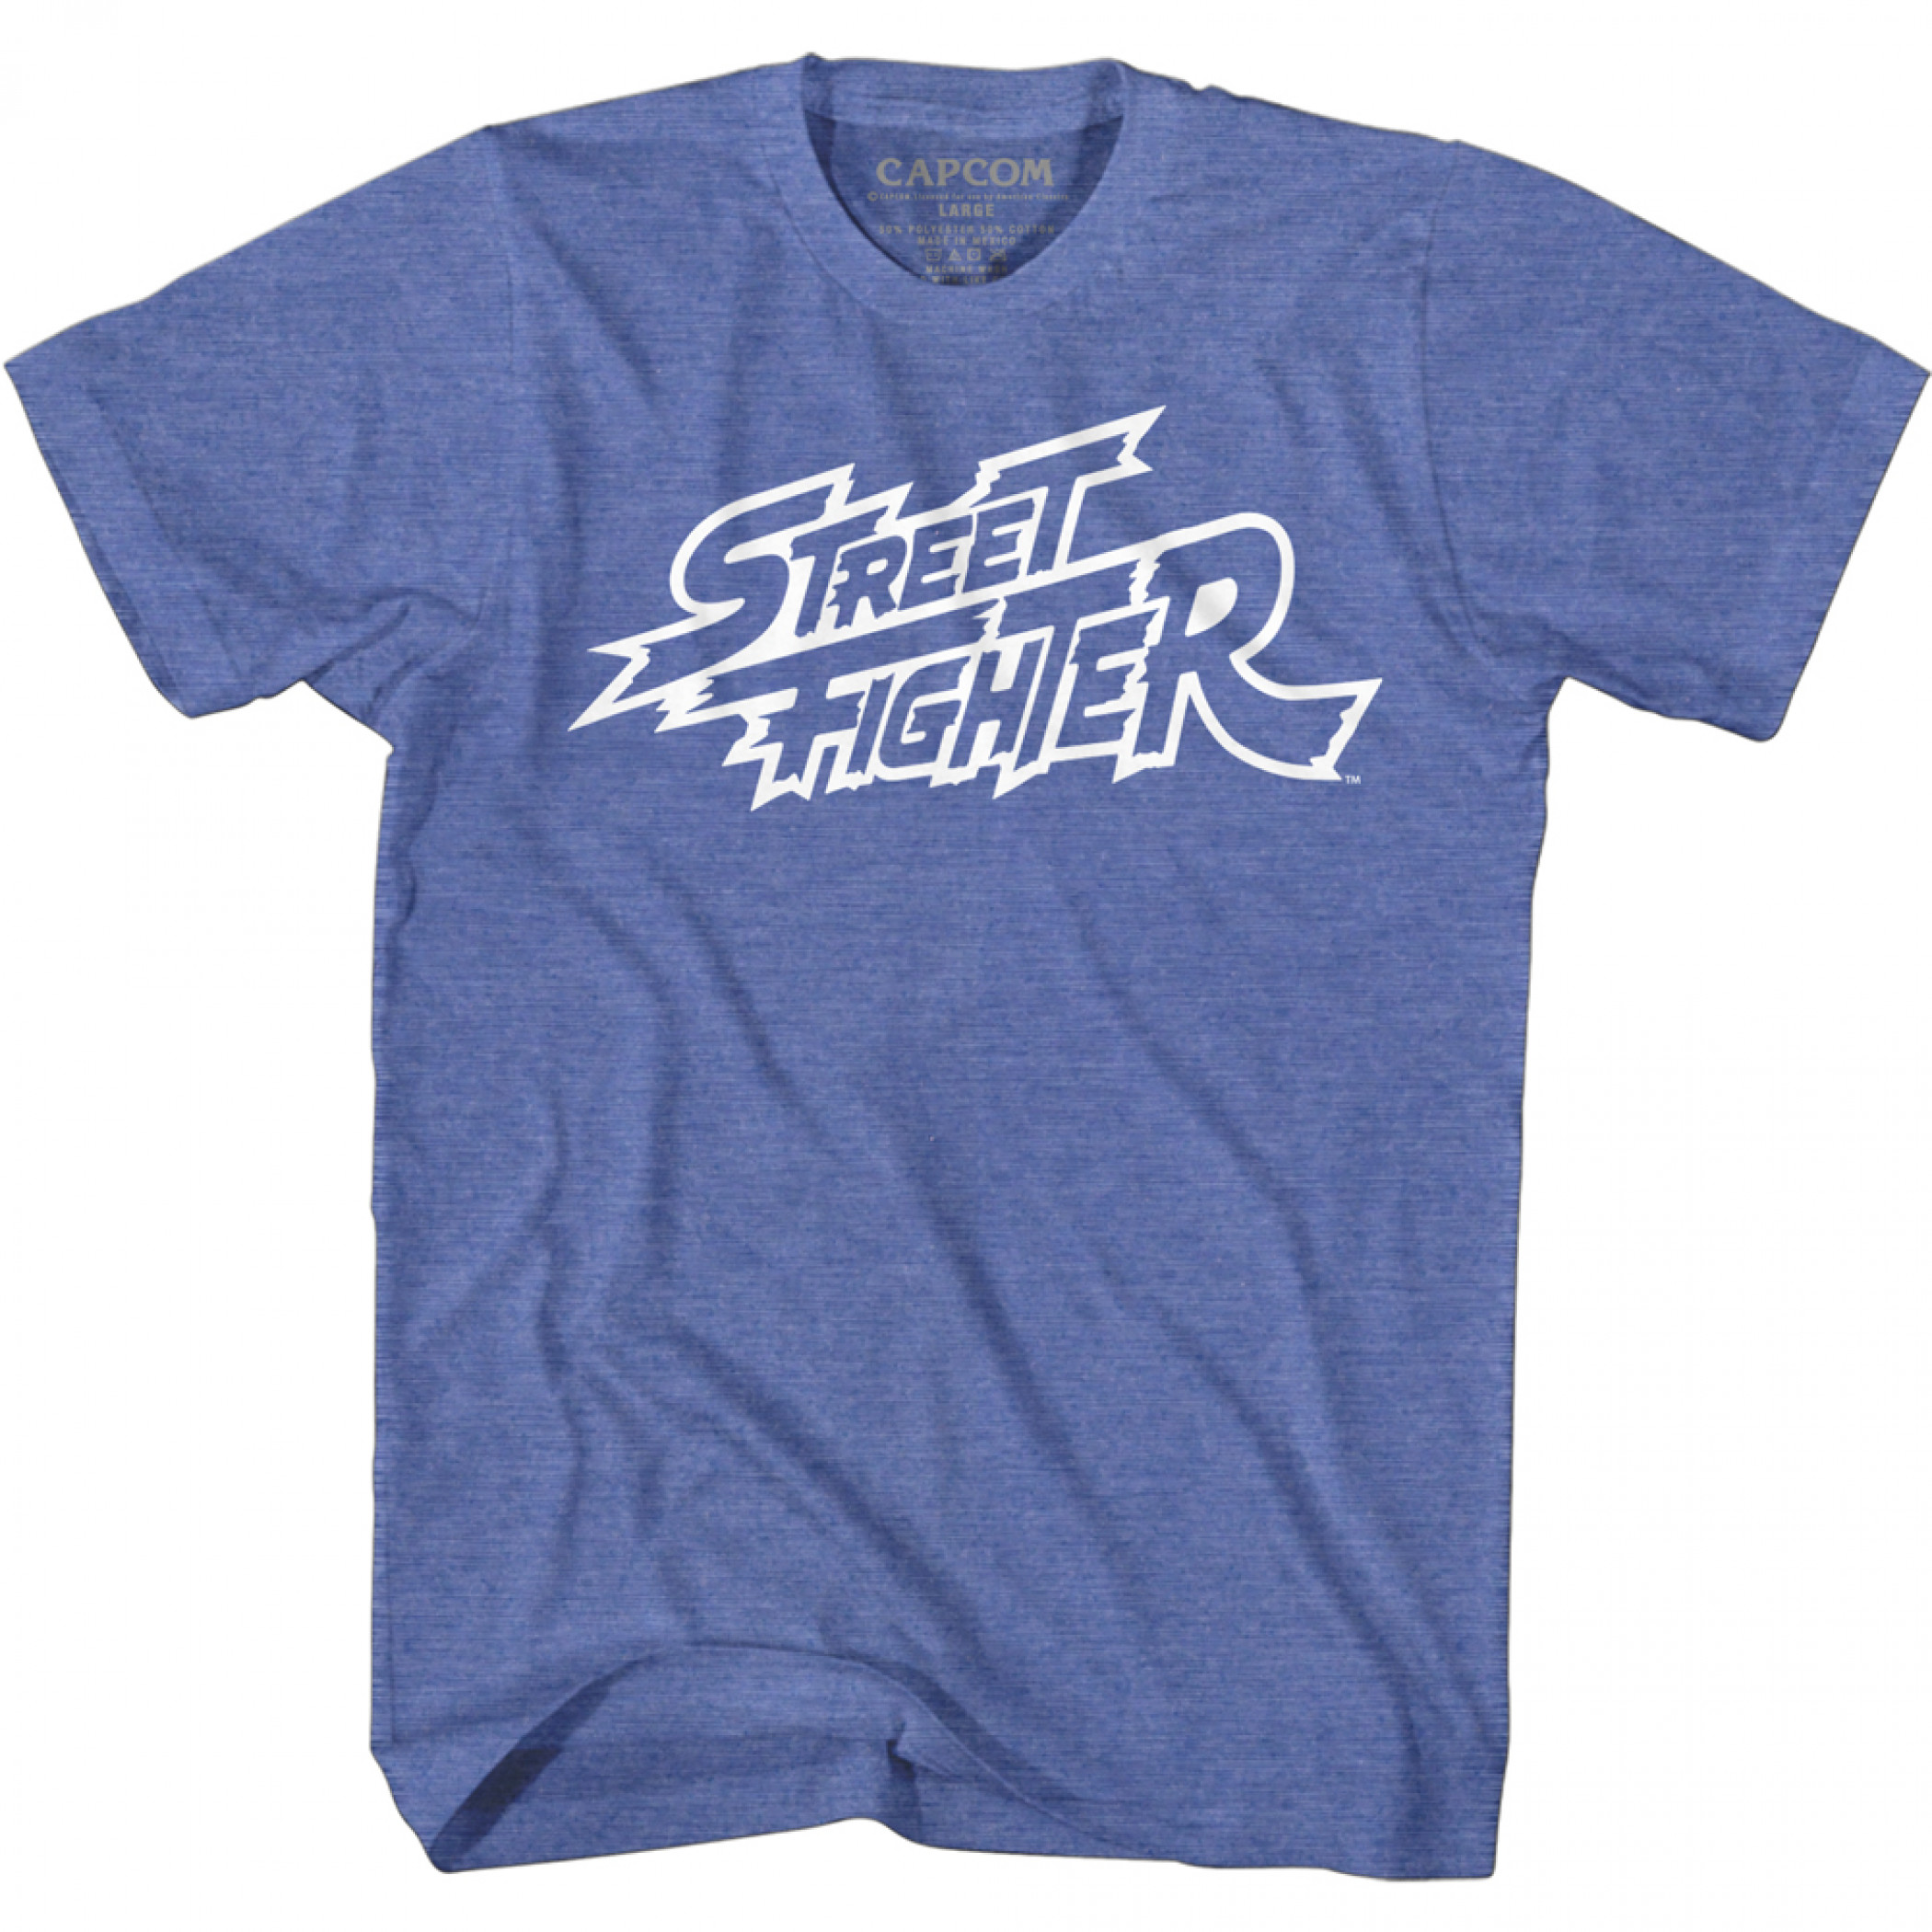 Street Fighter Classic Logo T-Shirt